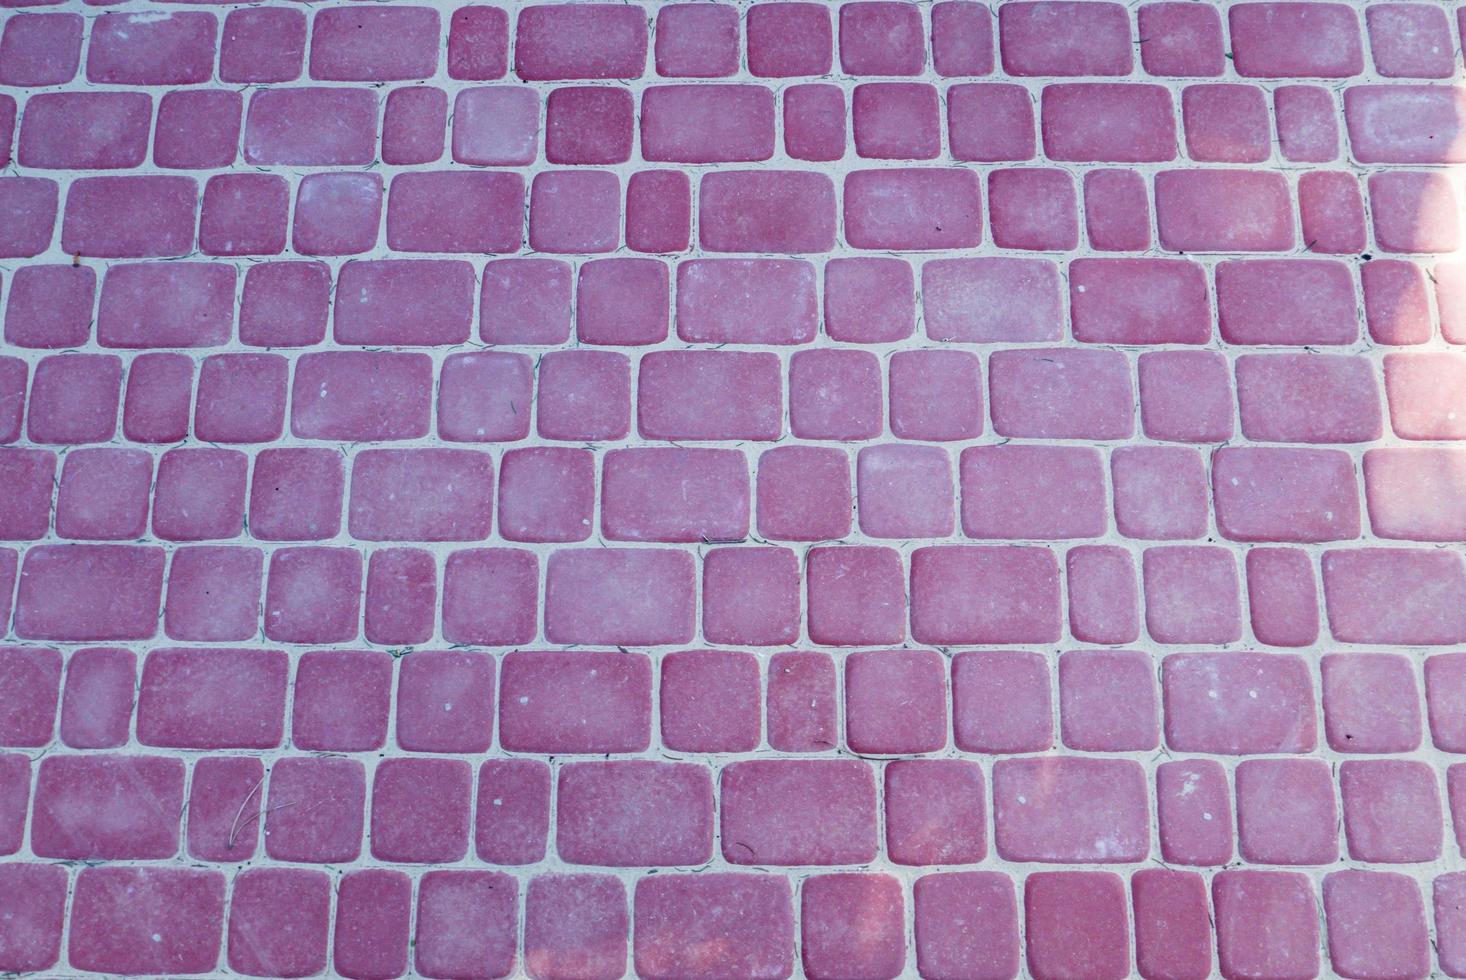 textura de tijolos rosa escuro. foto